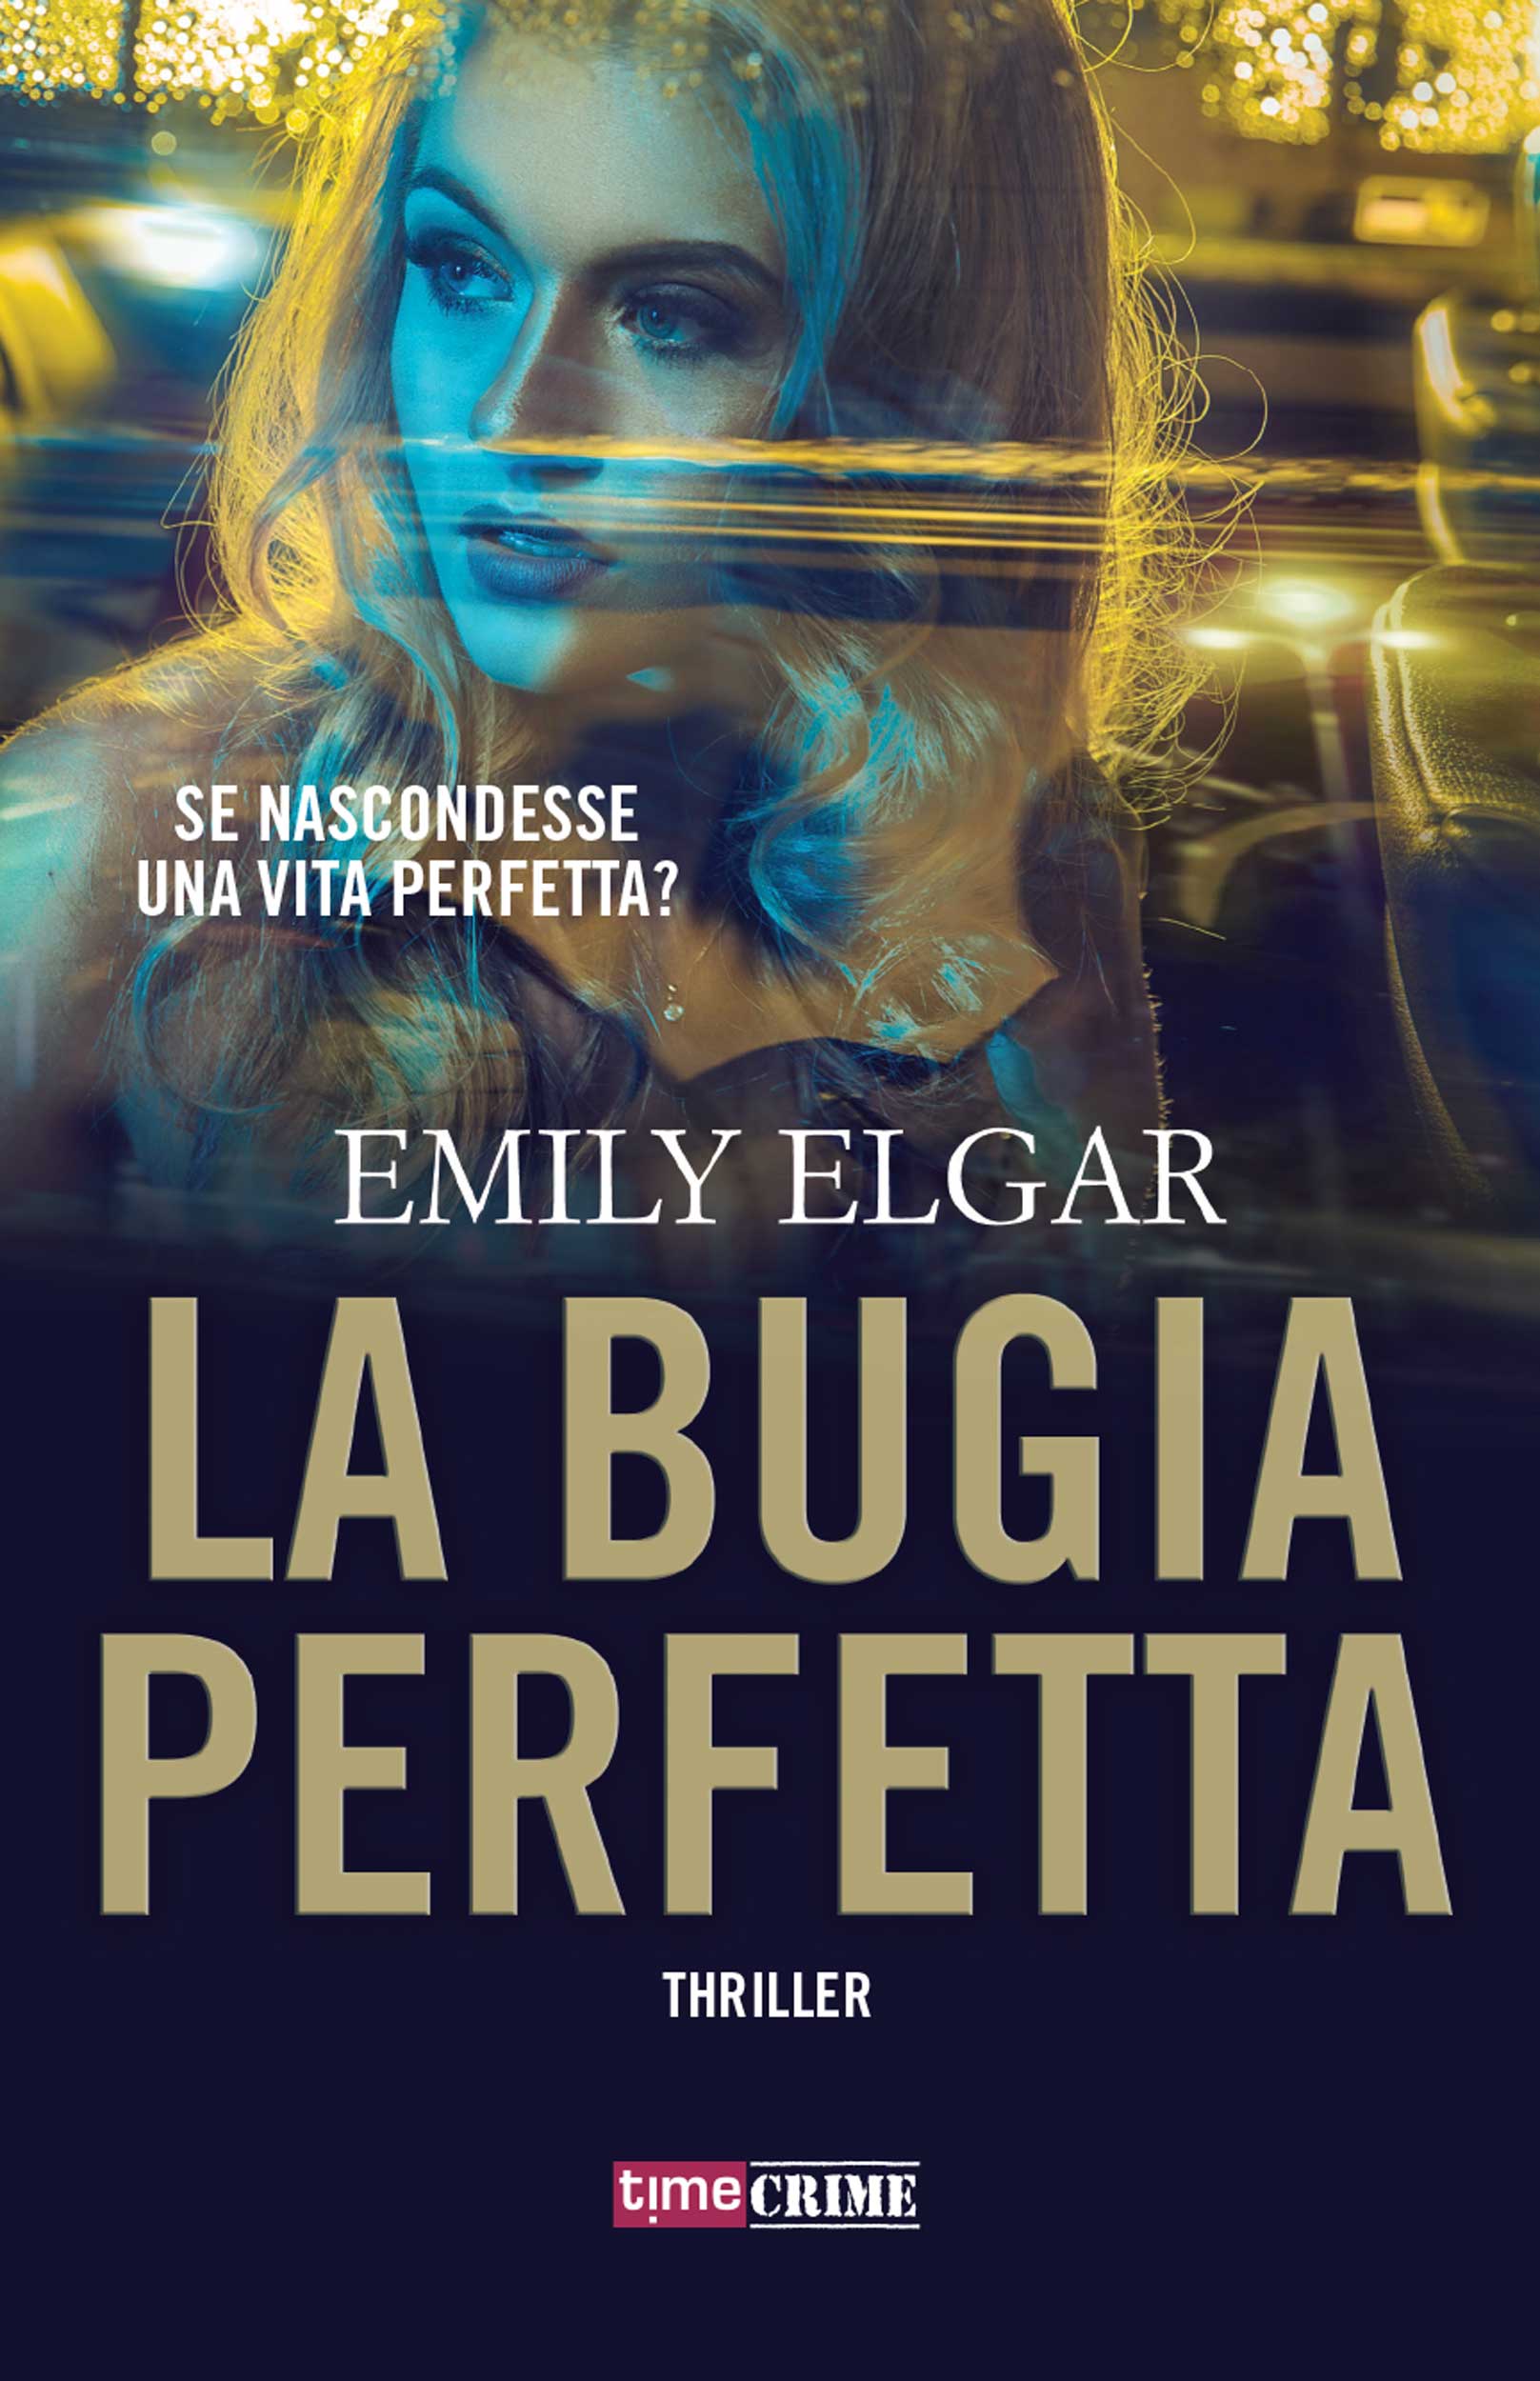 Emily Elgar la bugia perfetta